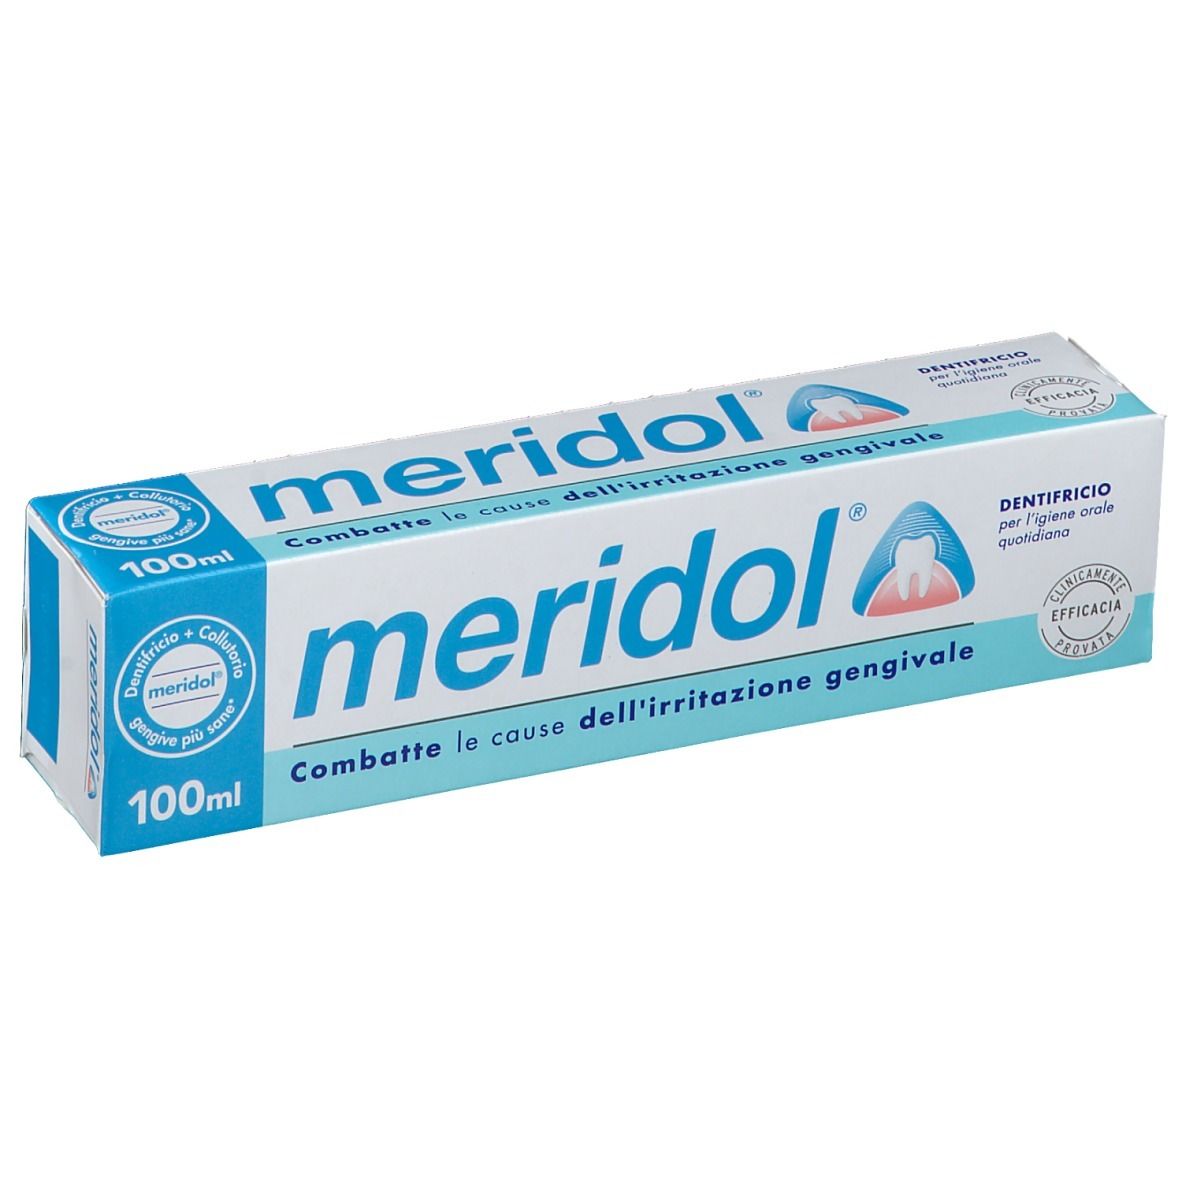 Dentifricio Meridol®